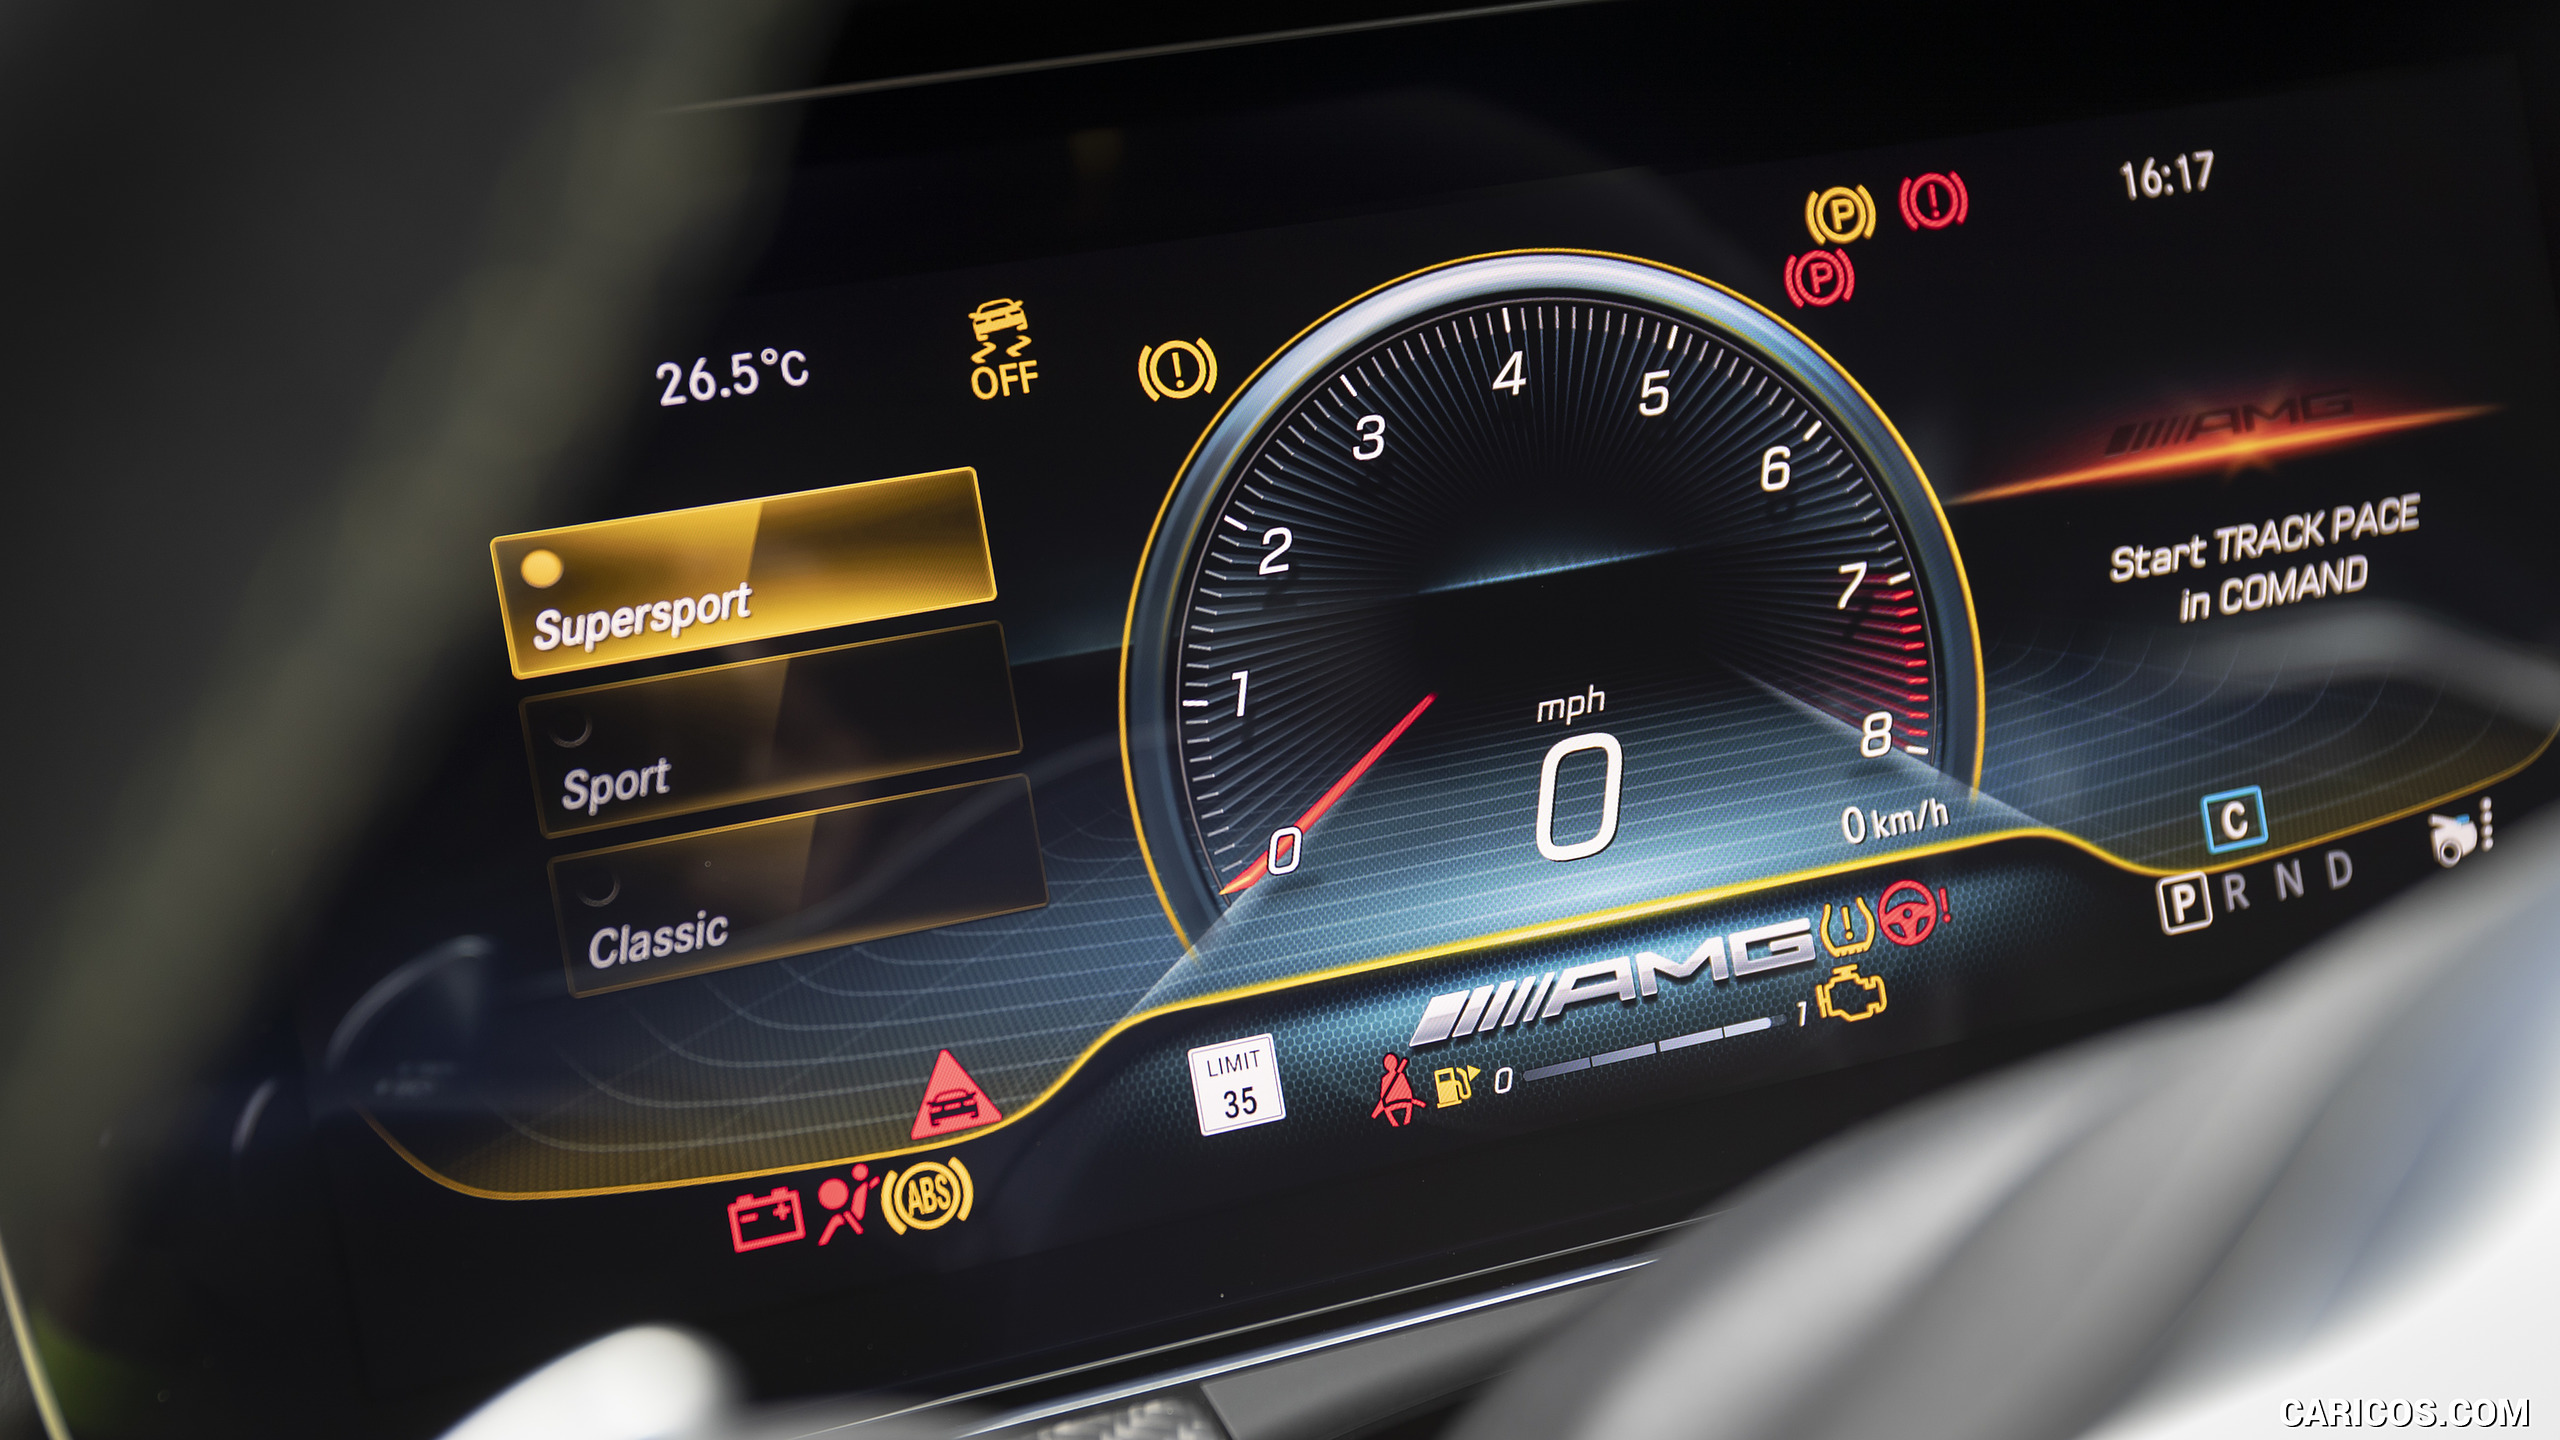 2019 Mercedes-AMG GT 63 S 4MATIC+ 4-Door Coupe - Digital Instrument Cluster, #232 of 427